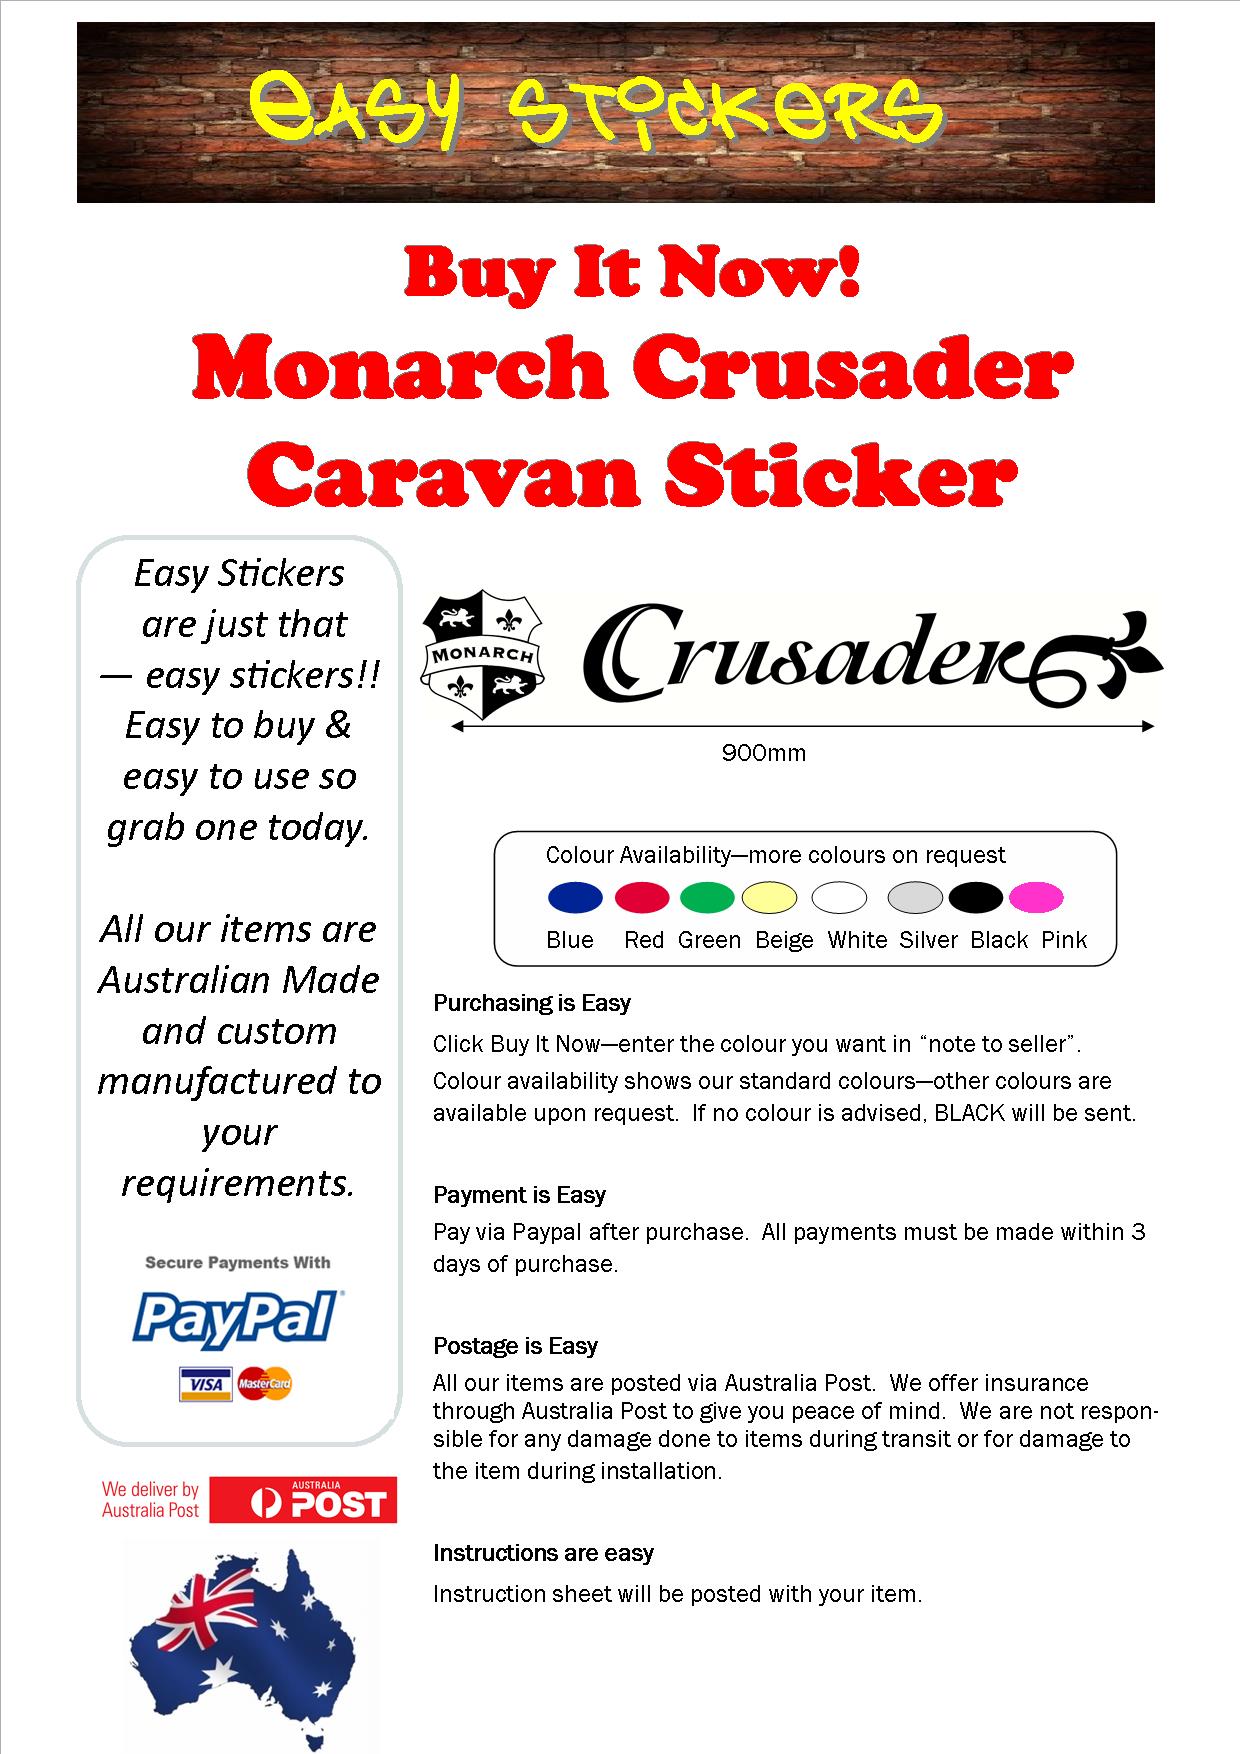 Ebay Template  Monarch Crusader.jpg  by easystickers